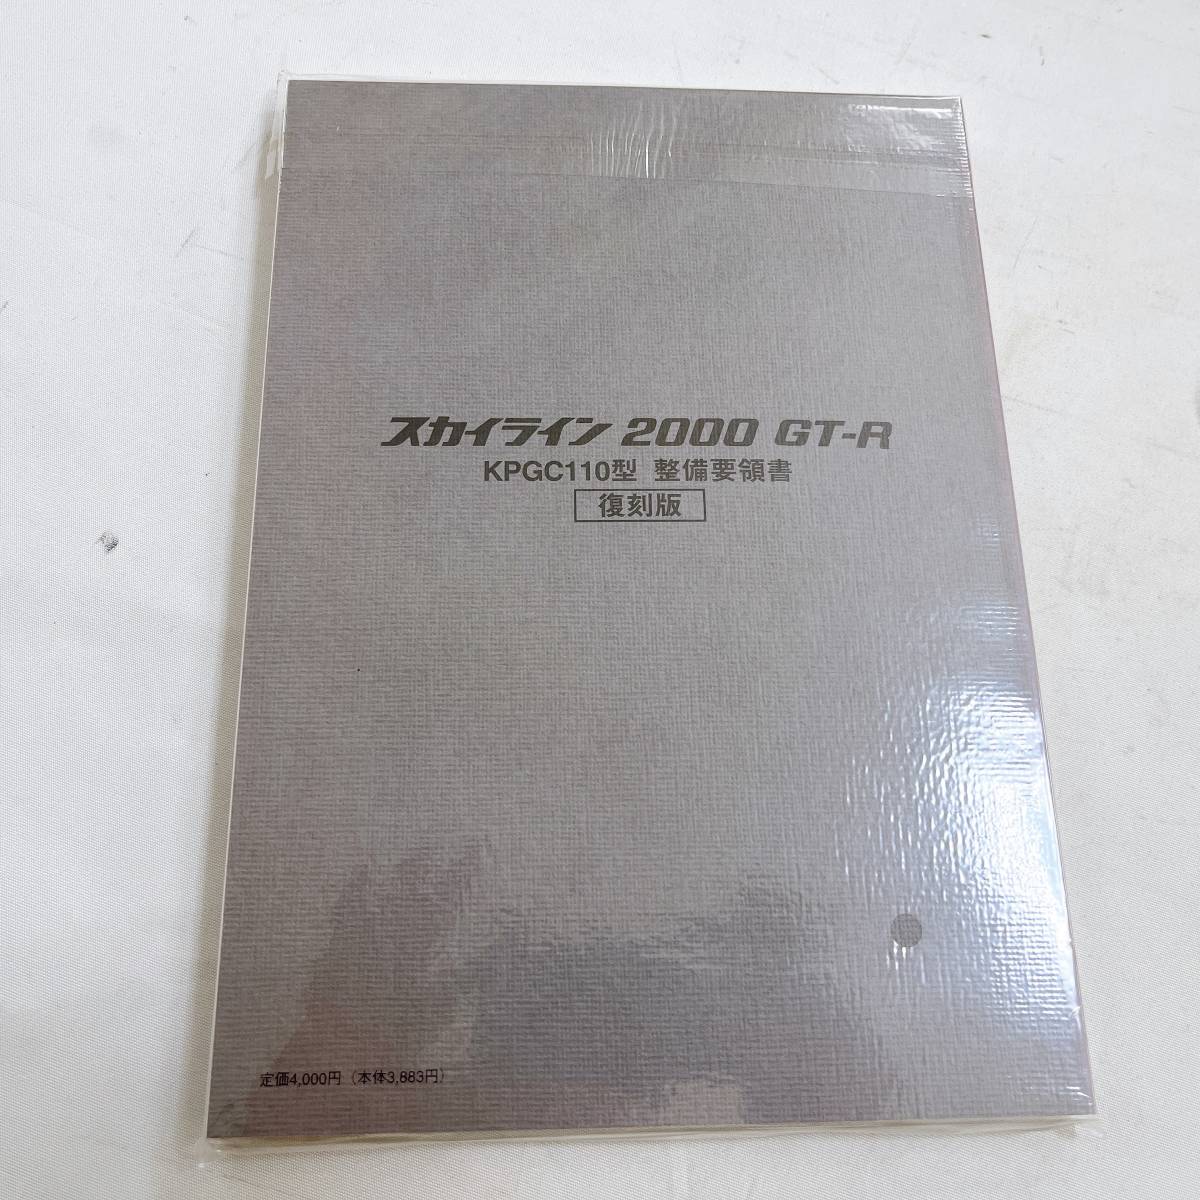  Ken&Mary GT-R maintenance point paper reprint unopened goods KPGC110 2000 GT-R